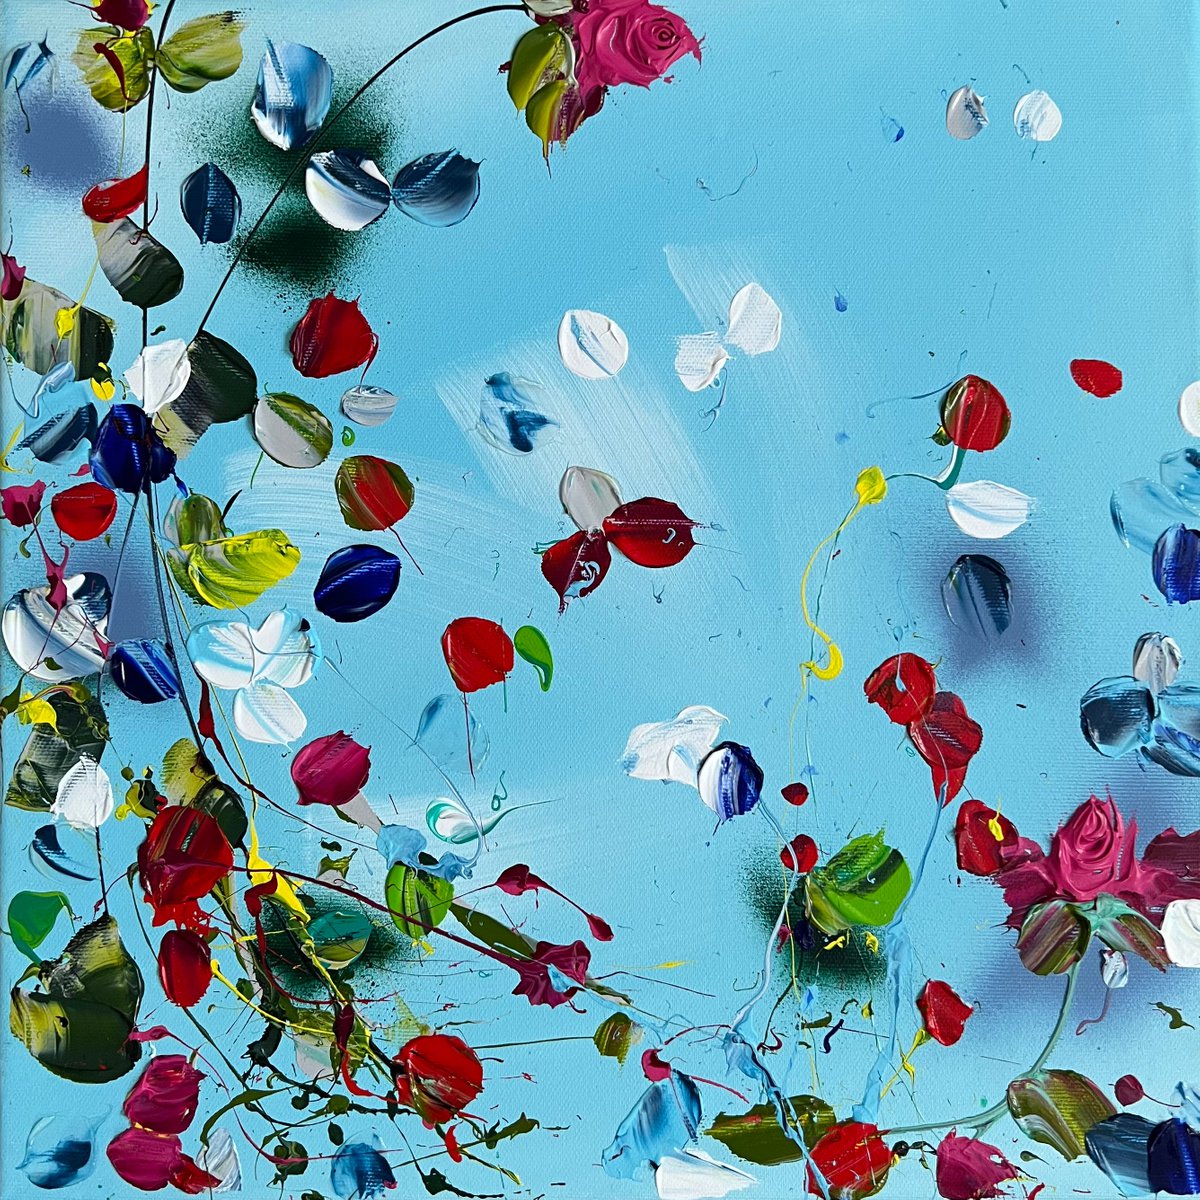 Blue Sky acrylic square artwork 40x40cm by Anastassia Skopp